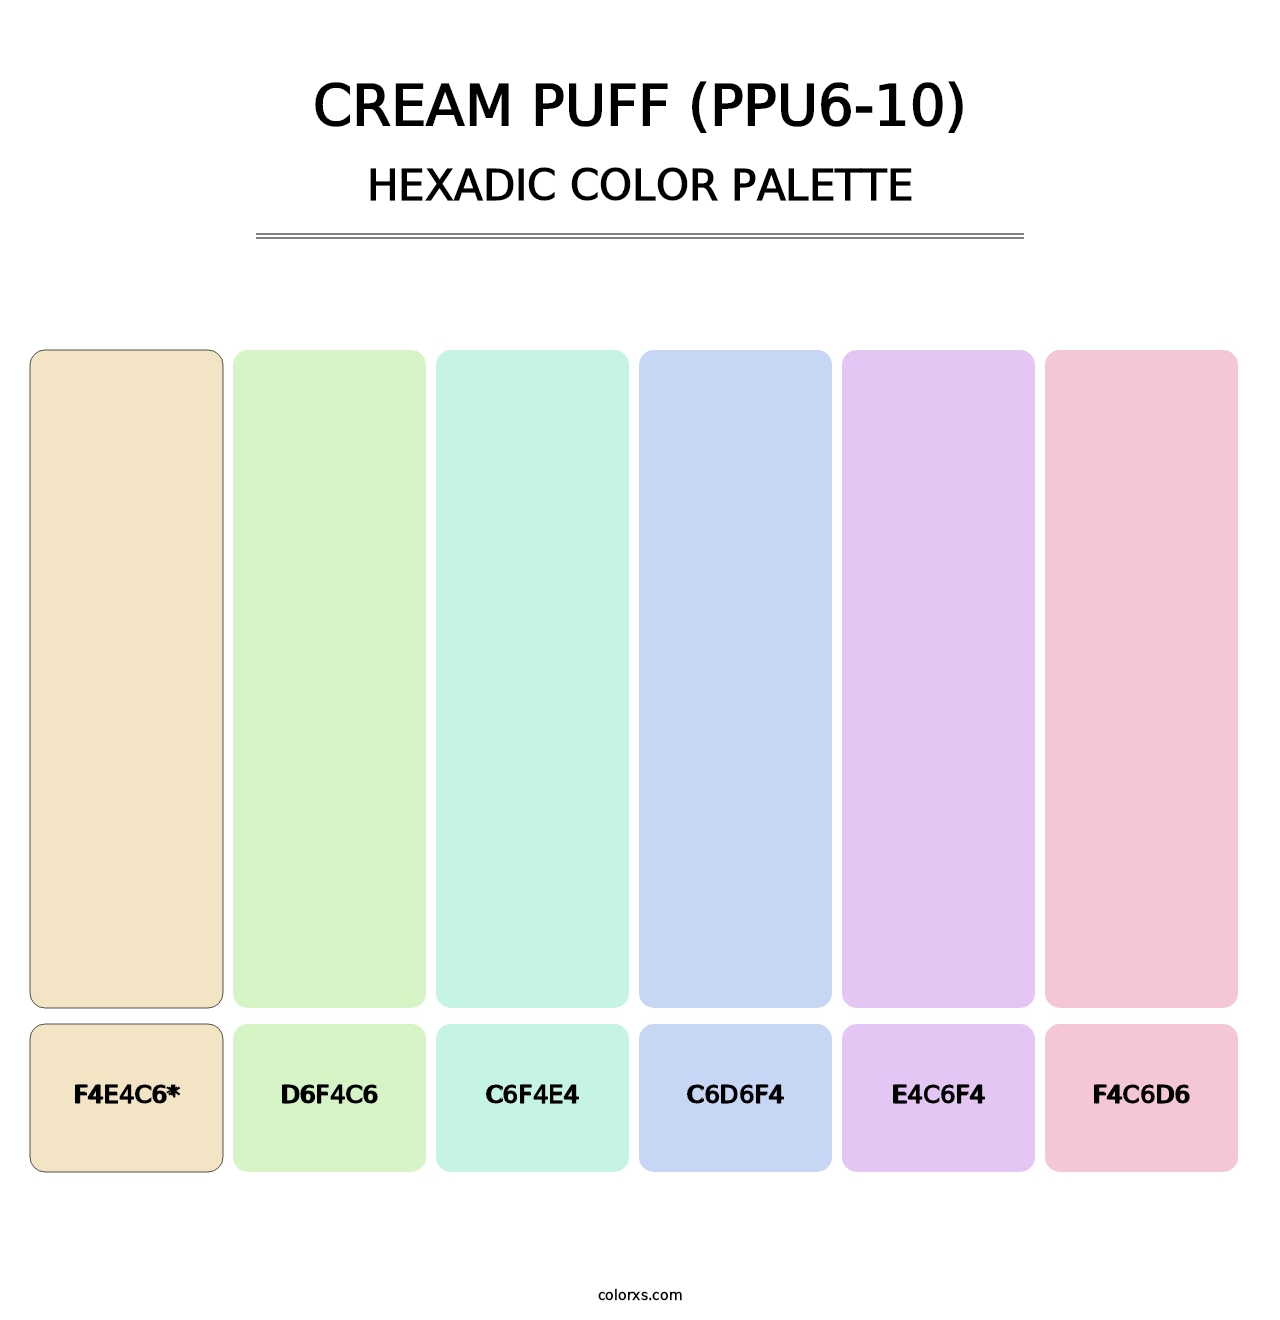 Cream Puff (PPU6-10) - Hexadic Color Palette